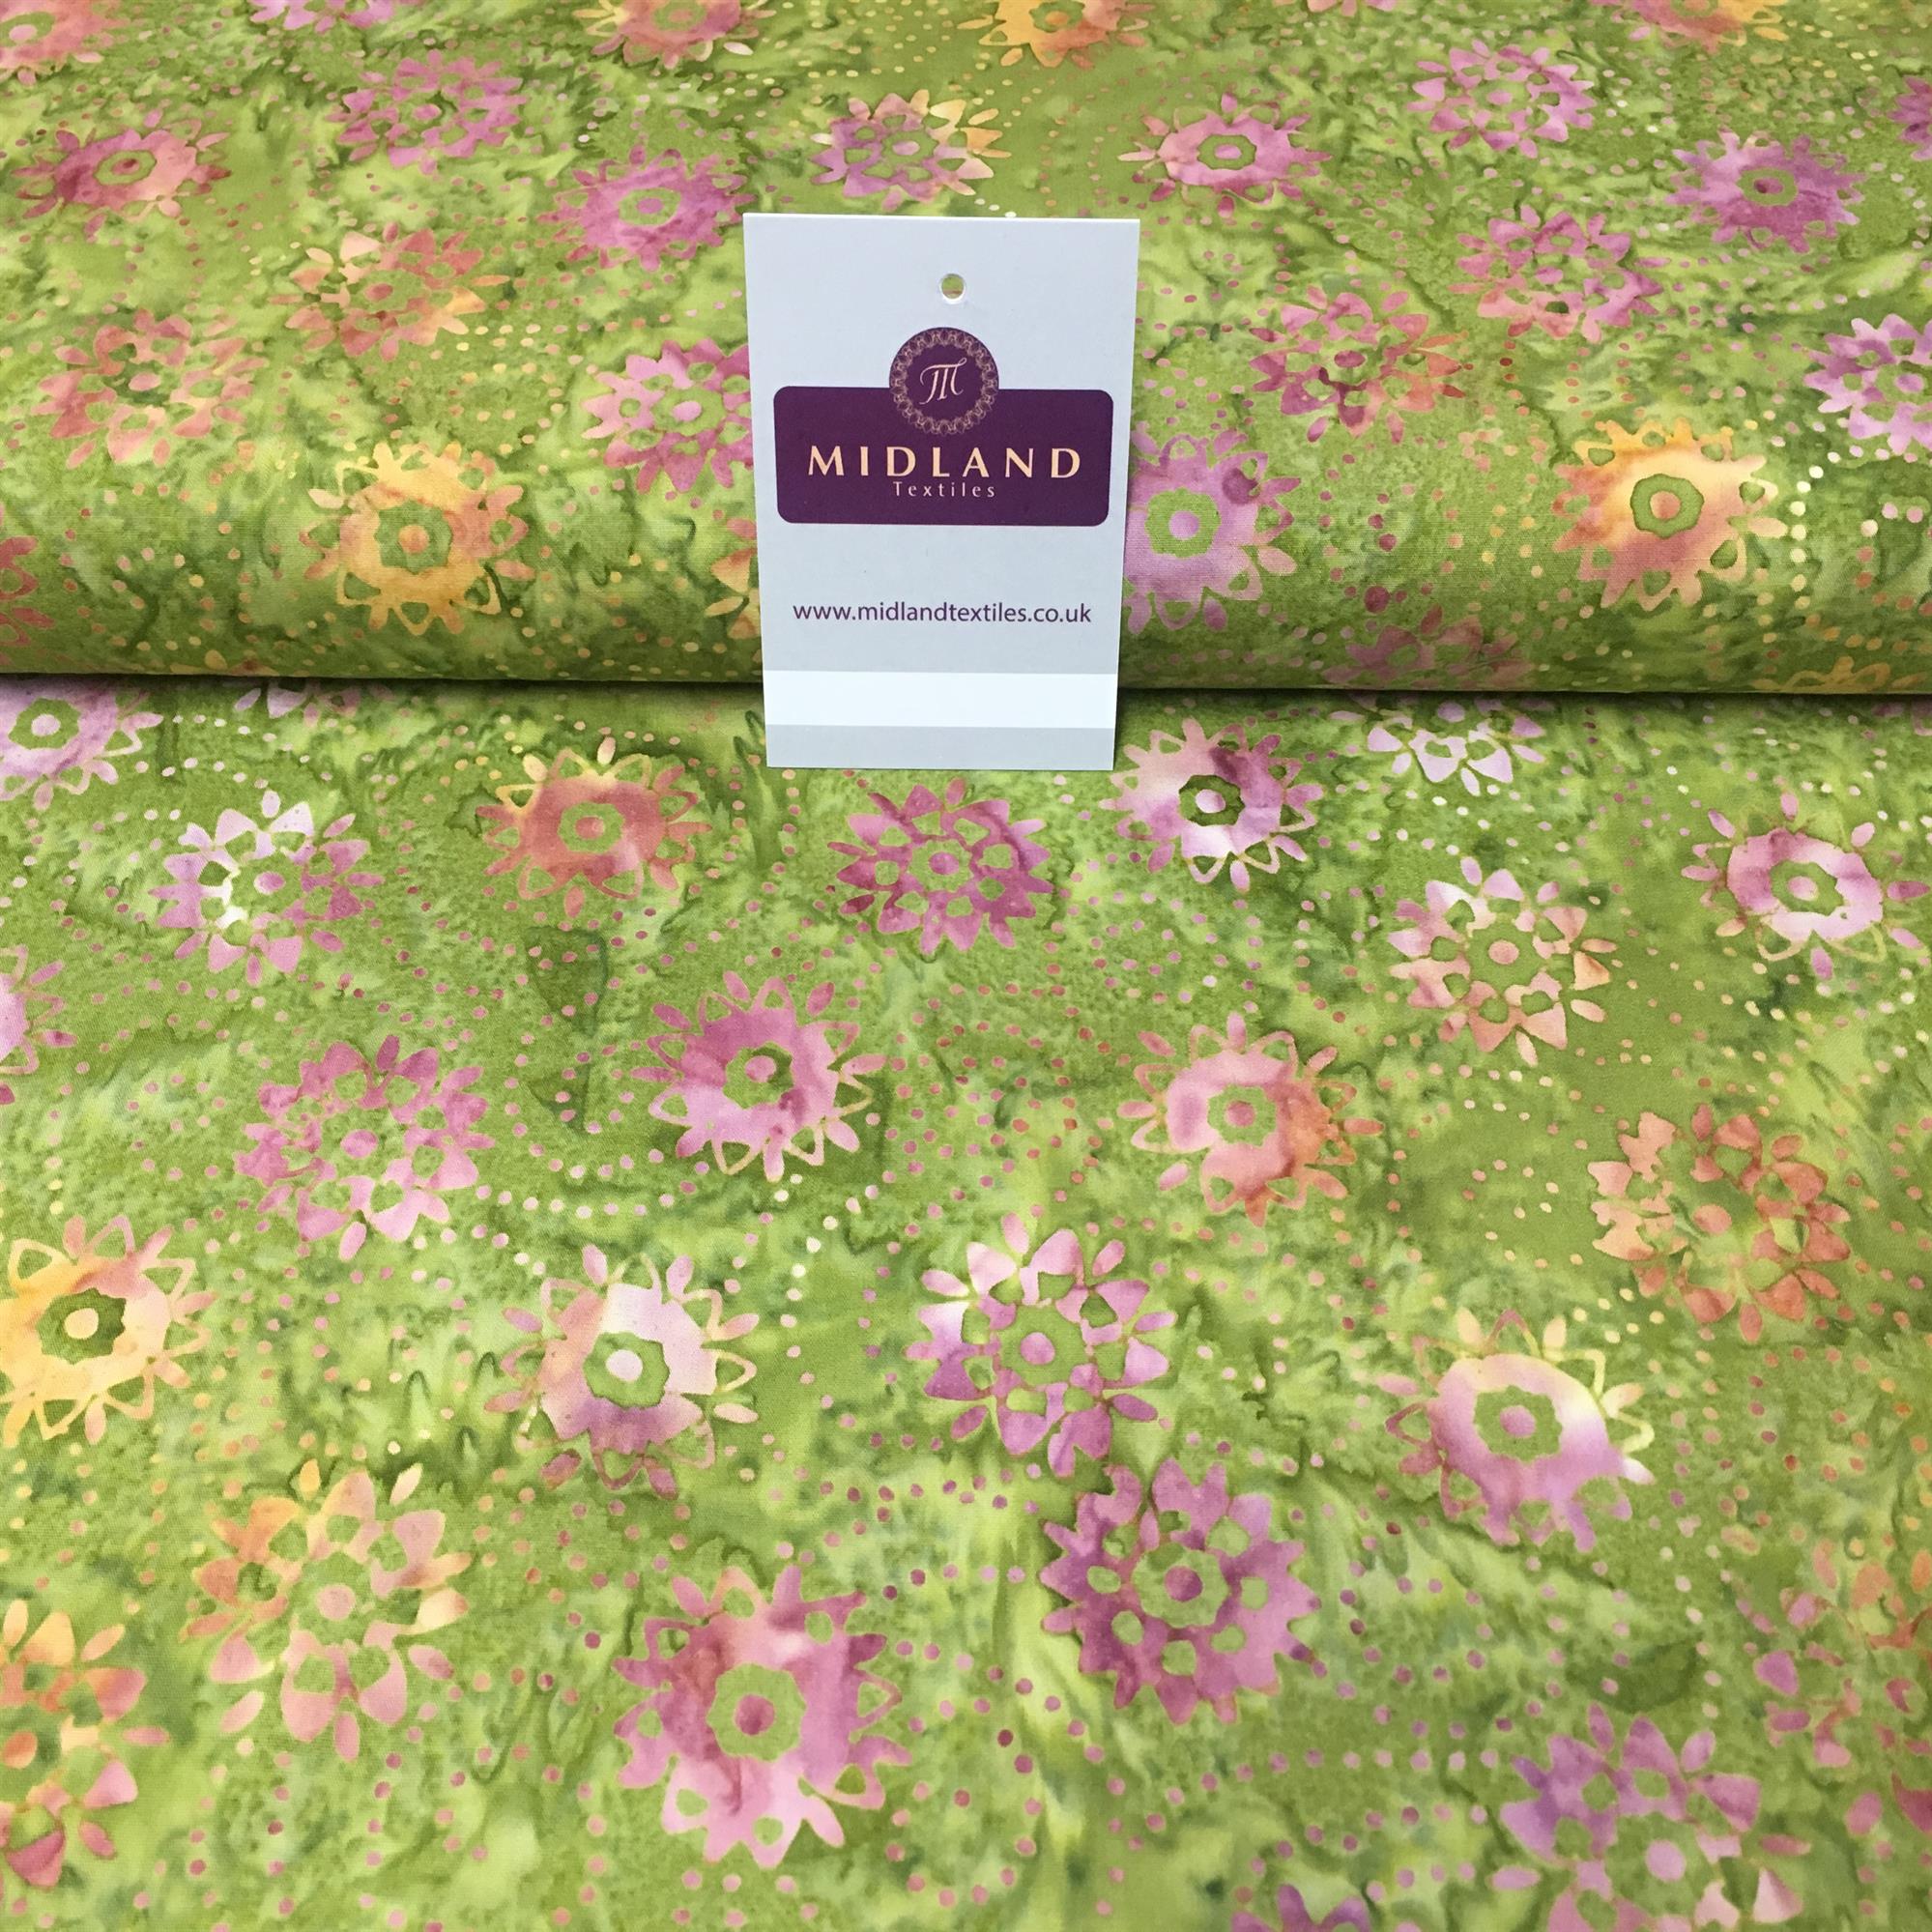 Clog Tie Dye Bali Batik 100% Cotton patchwork Fabric 44" Wide MK900 Mtex Teal A / Sample